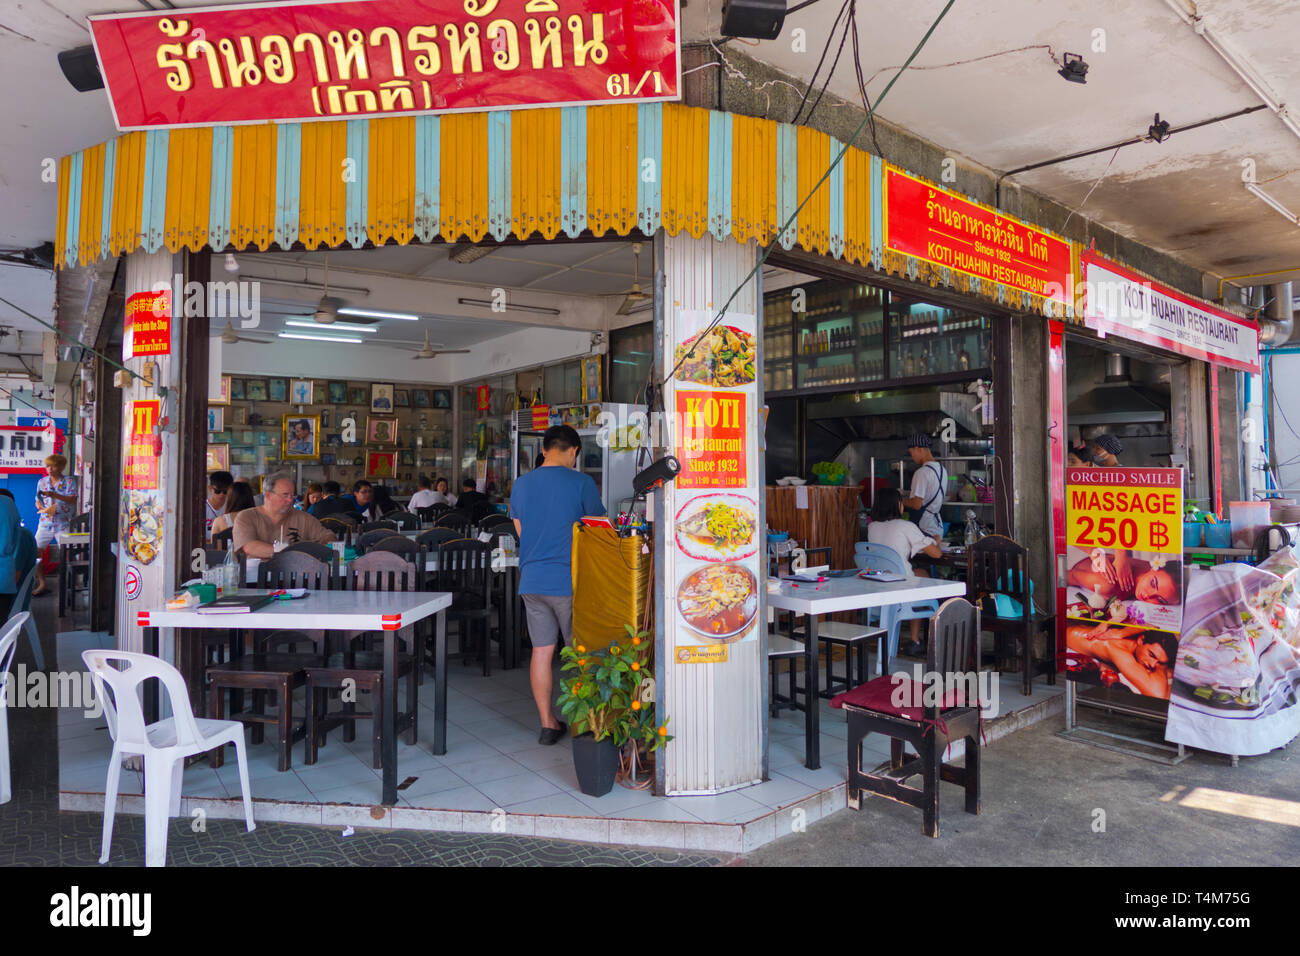 Restaurant Koti, Hua Hin, Thailand Stock Photo